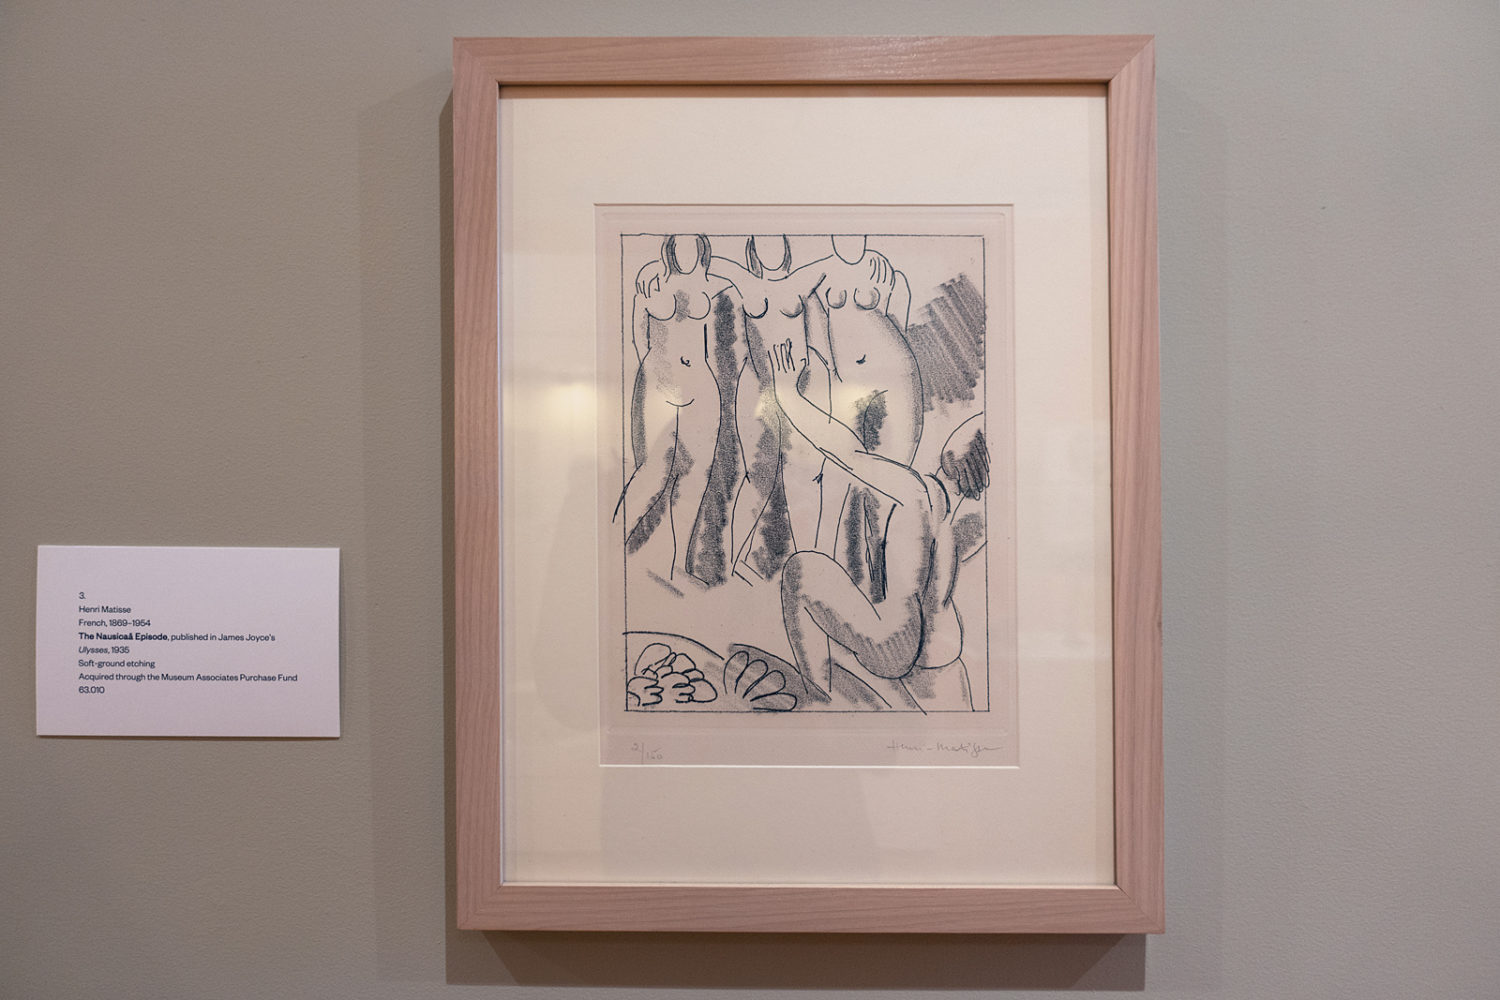 Matisse "Nausicaa Episode" illustration for James Joyce's "Ulysses" at Johnson Museum